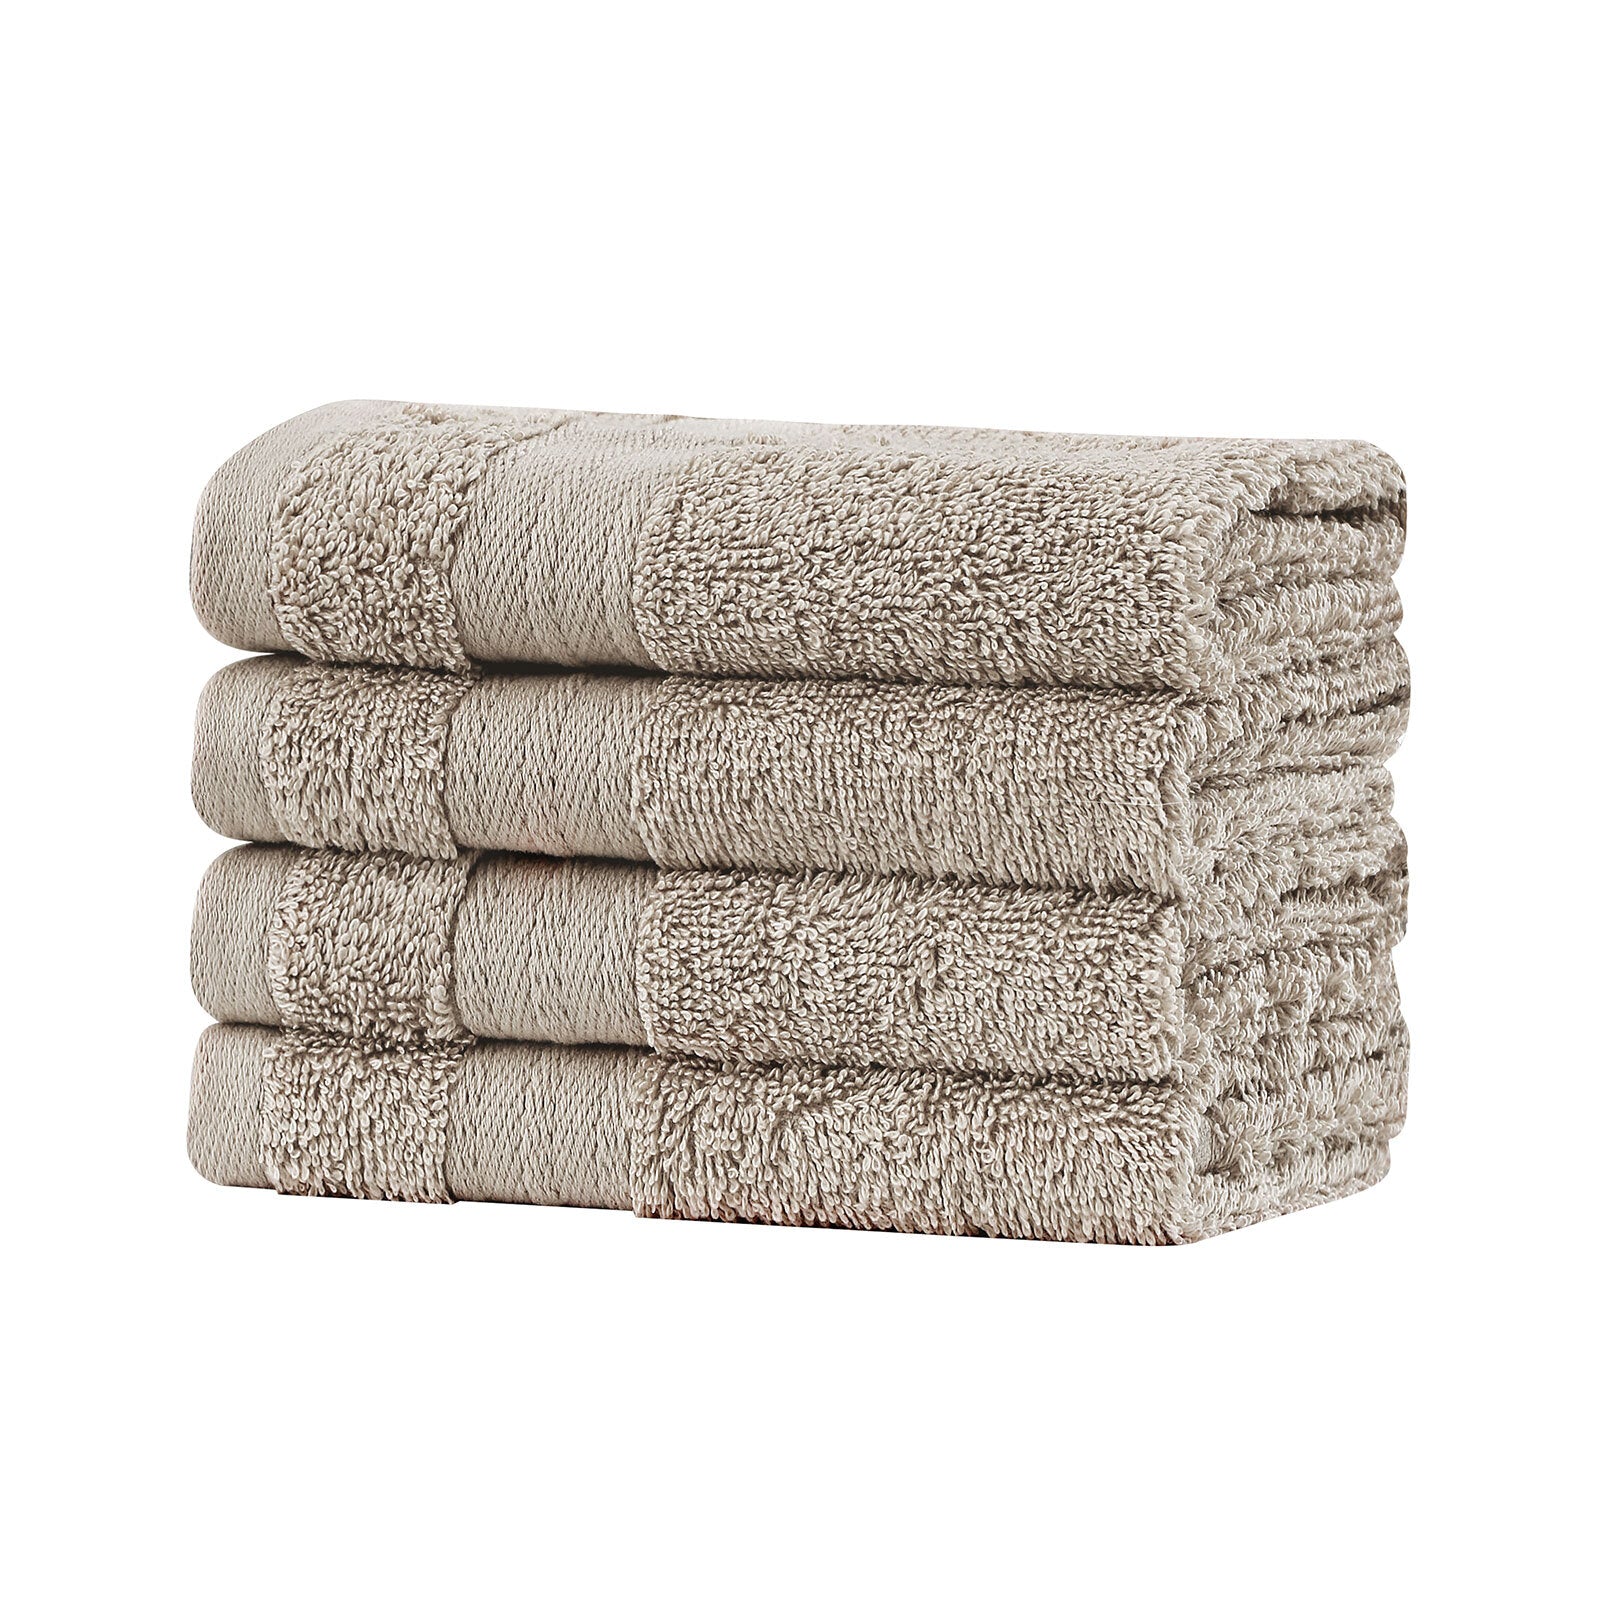 Linenland Bath Towel Set - 4 Piece Cotton Washcloths - Sandstone - 0